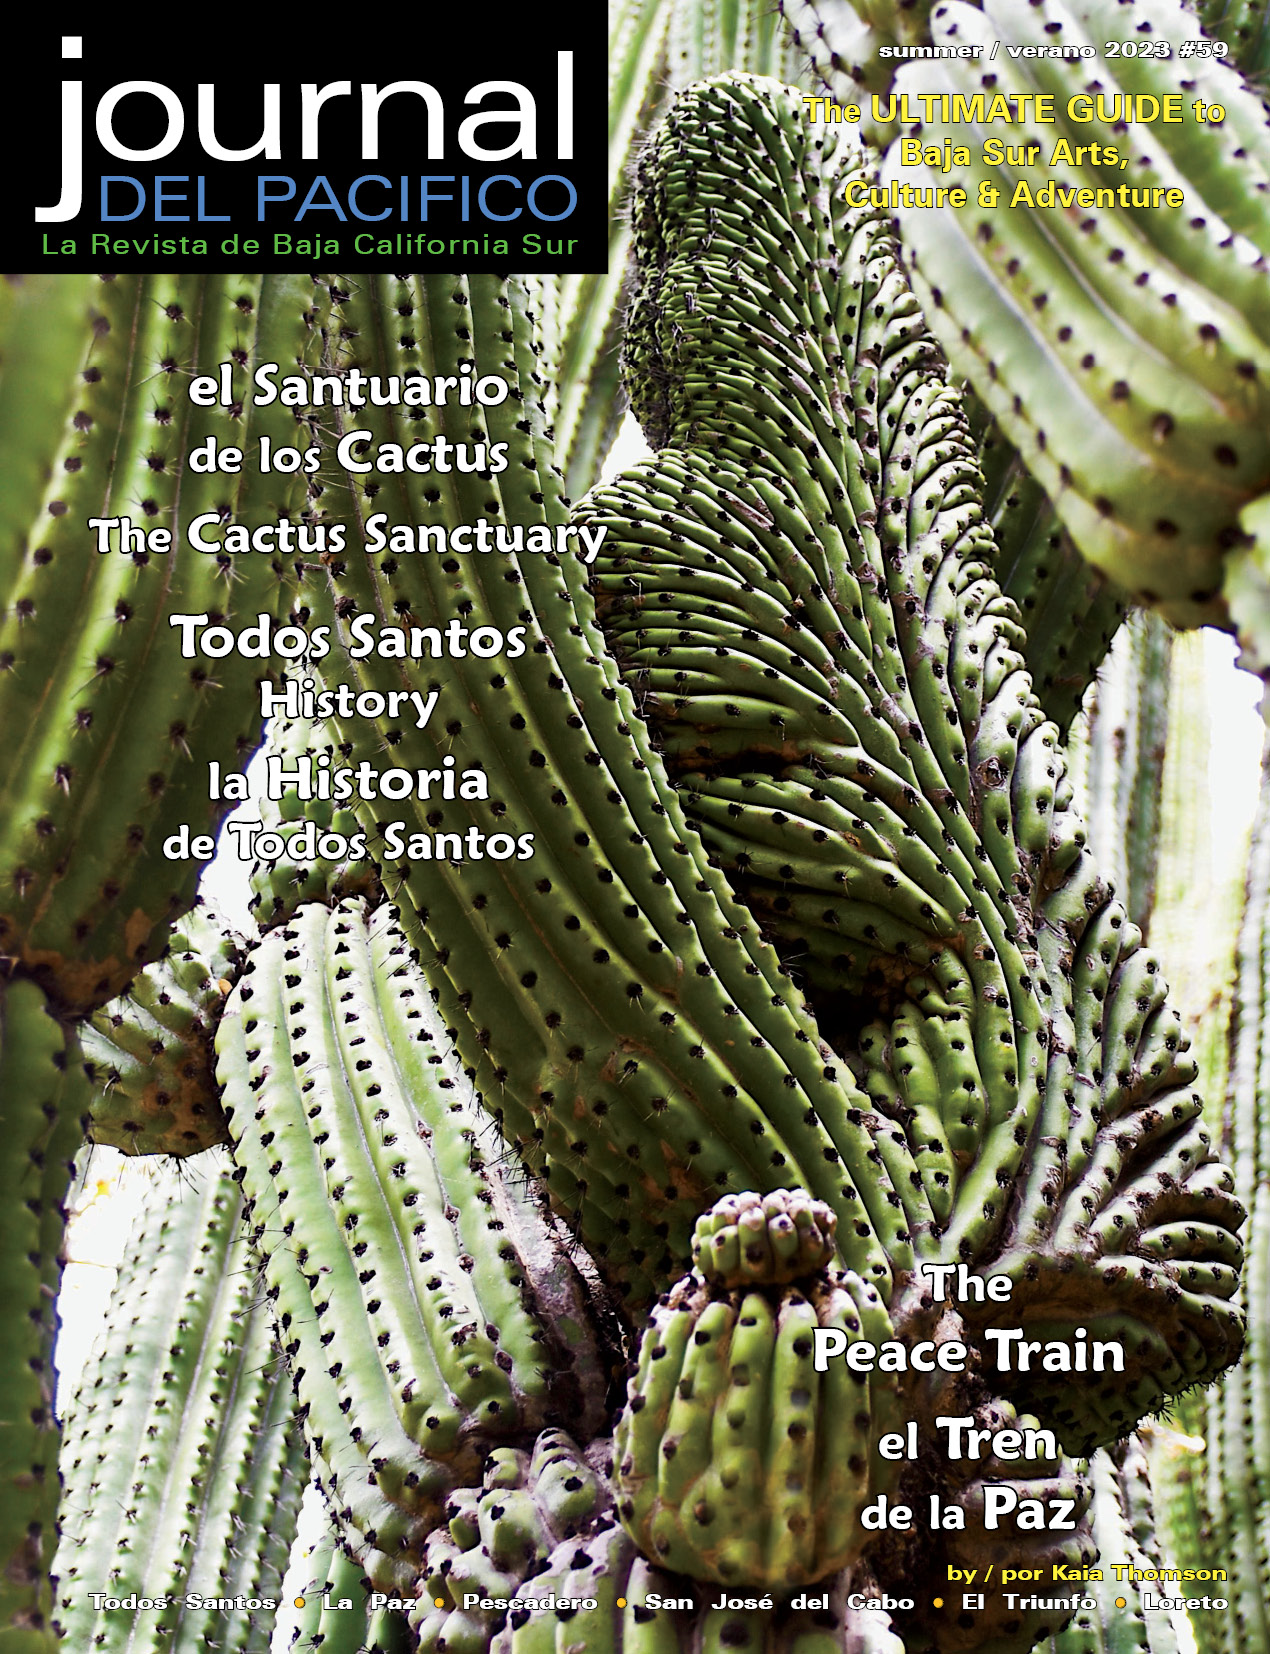 Summer/Verano 2023 Issue of Journal del Pacifico